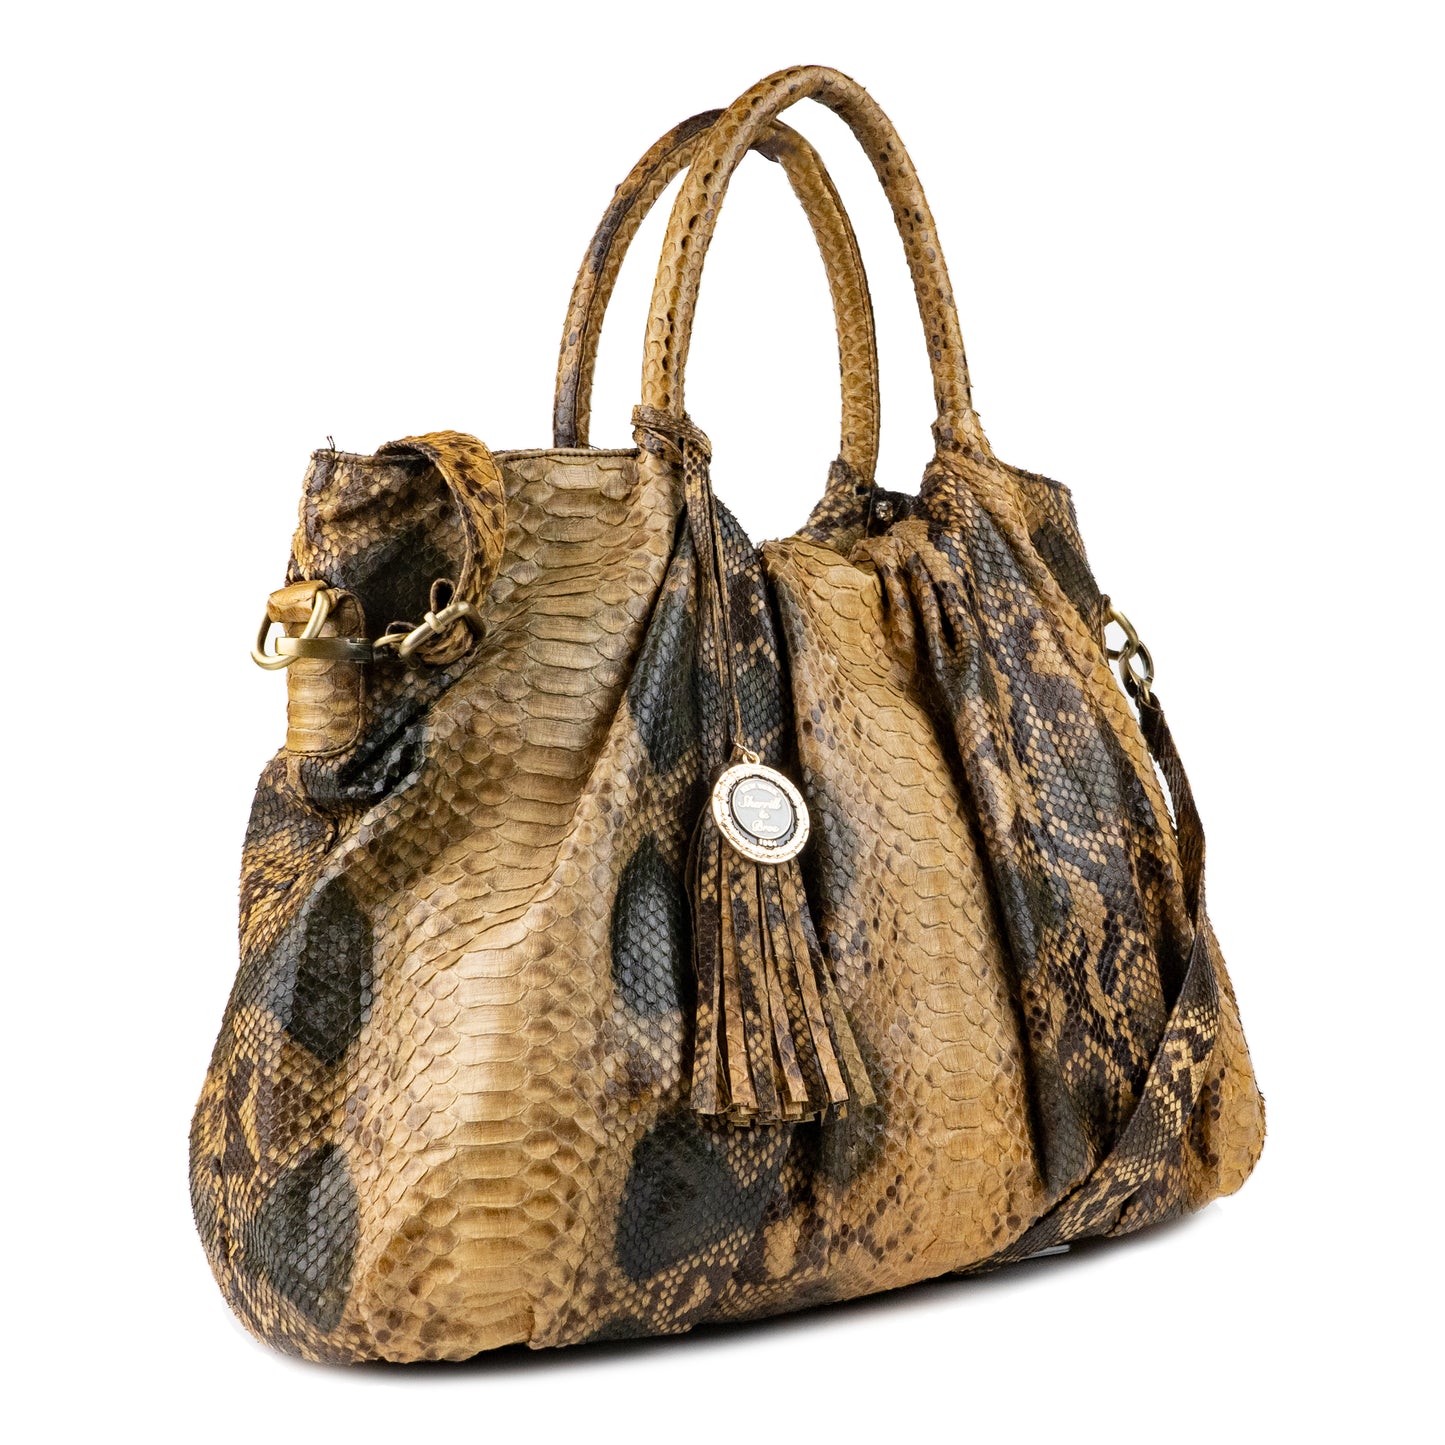 Black and Tan Genuine Python Handbag "Carol"